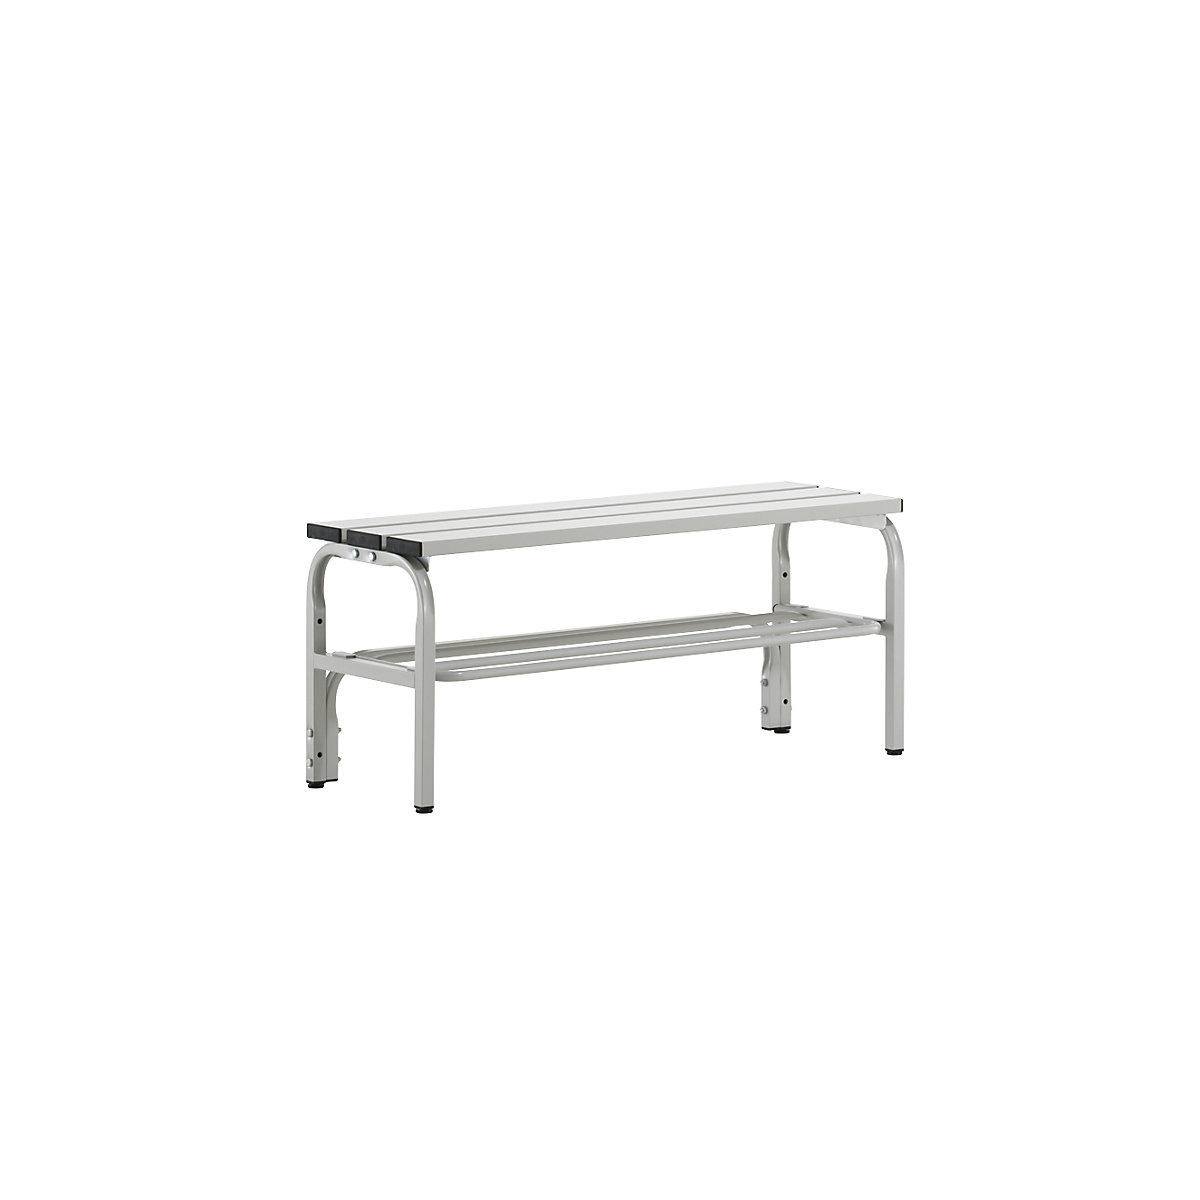 Sypro – Changing room bench with aluminium slats, HxD 450 x 350 mm, length 1015 mm, light grey, shoe rack